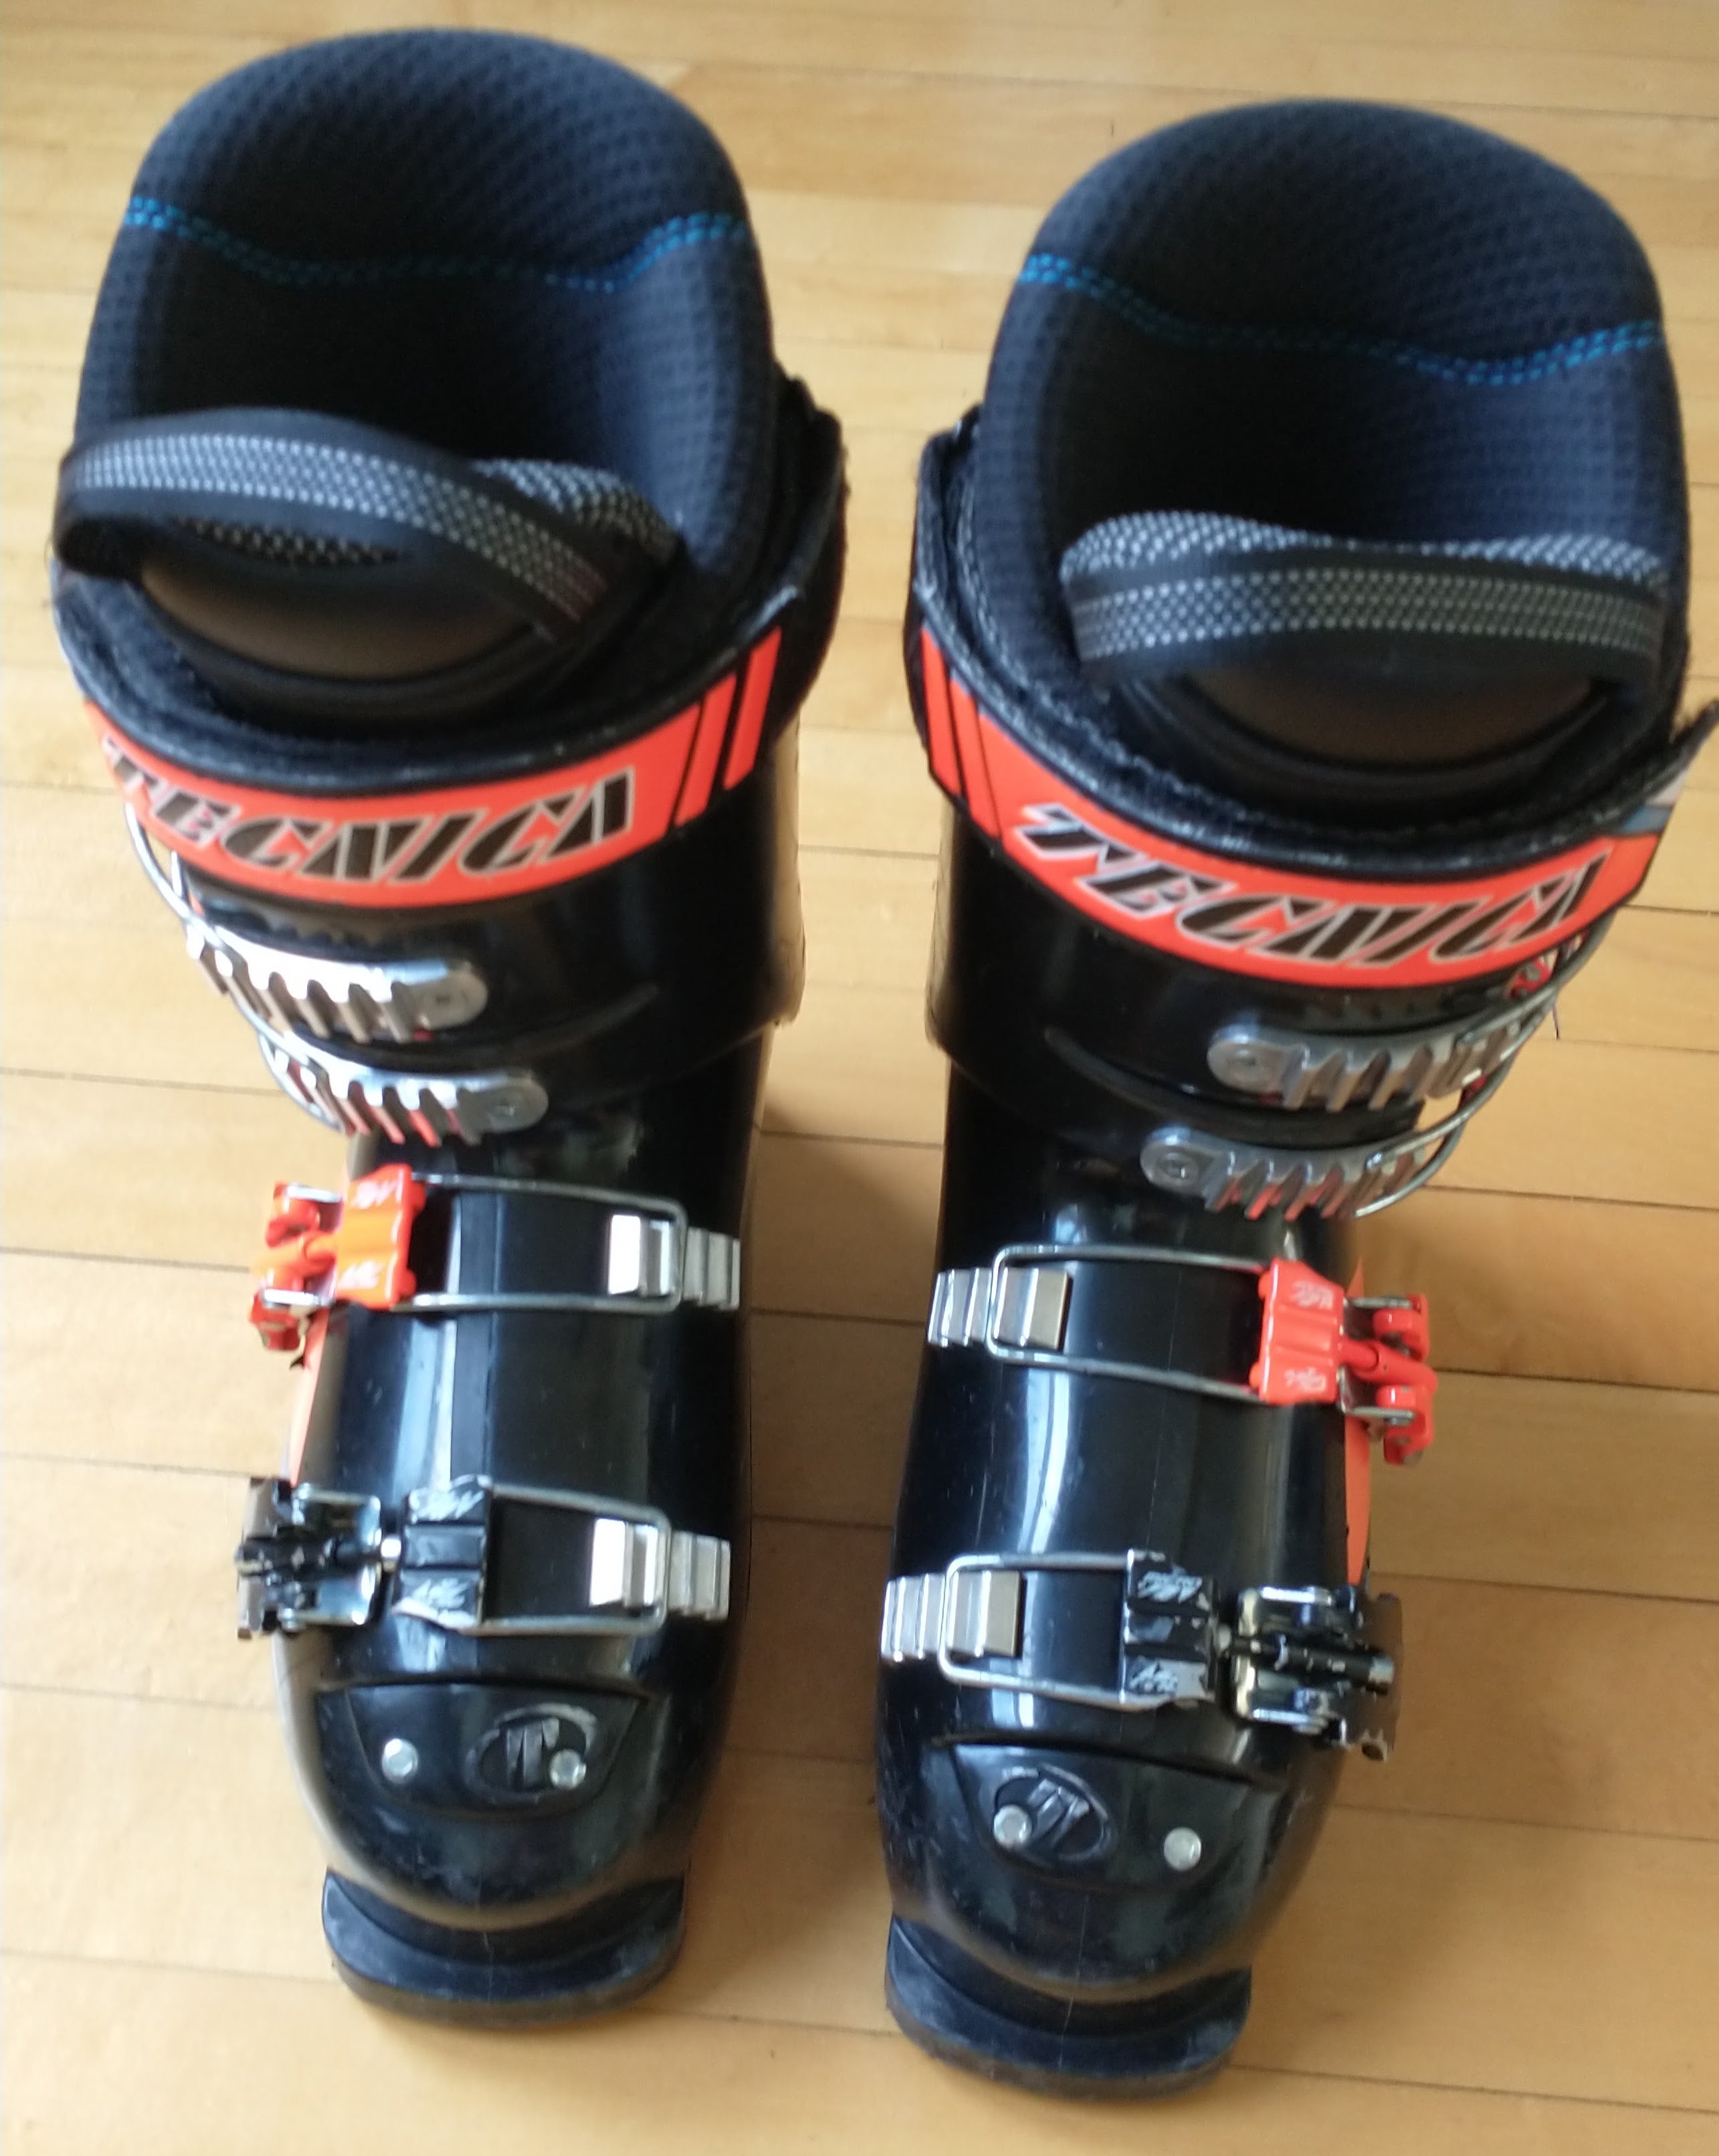 Tecnica R Pro 70 JR Kid's Race Ski Boots — Vermont Ski and Sport